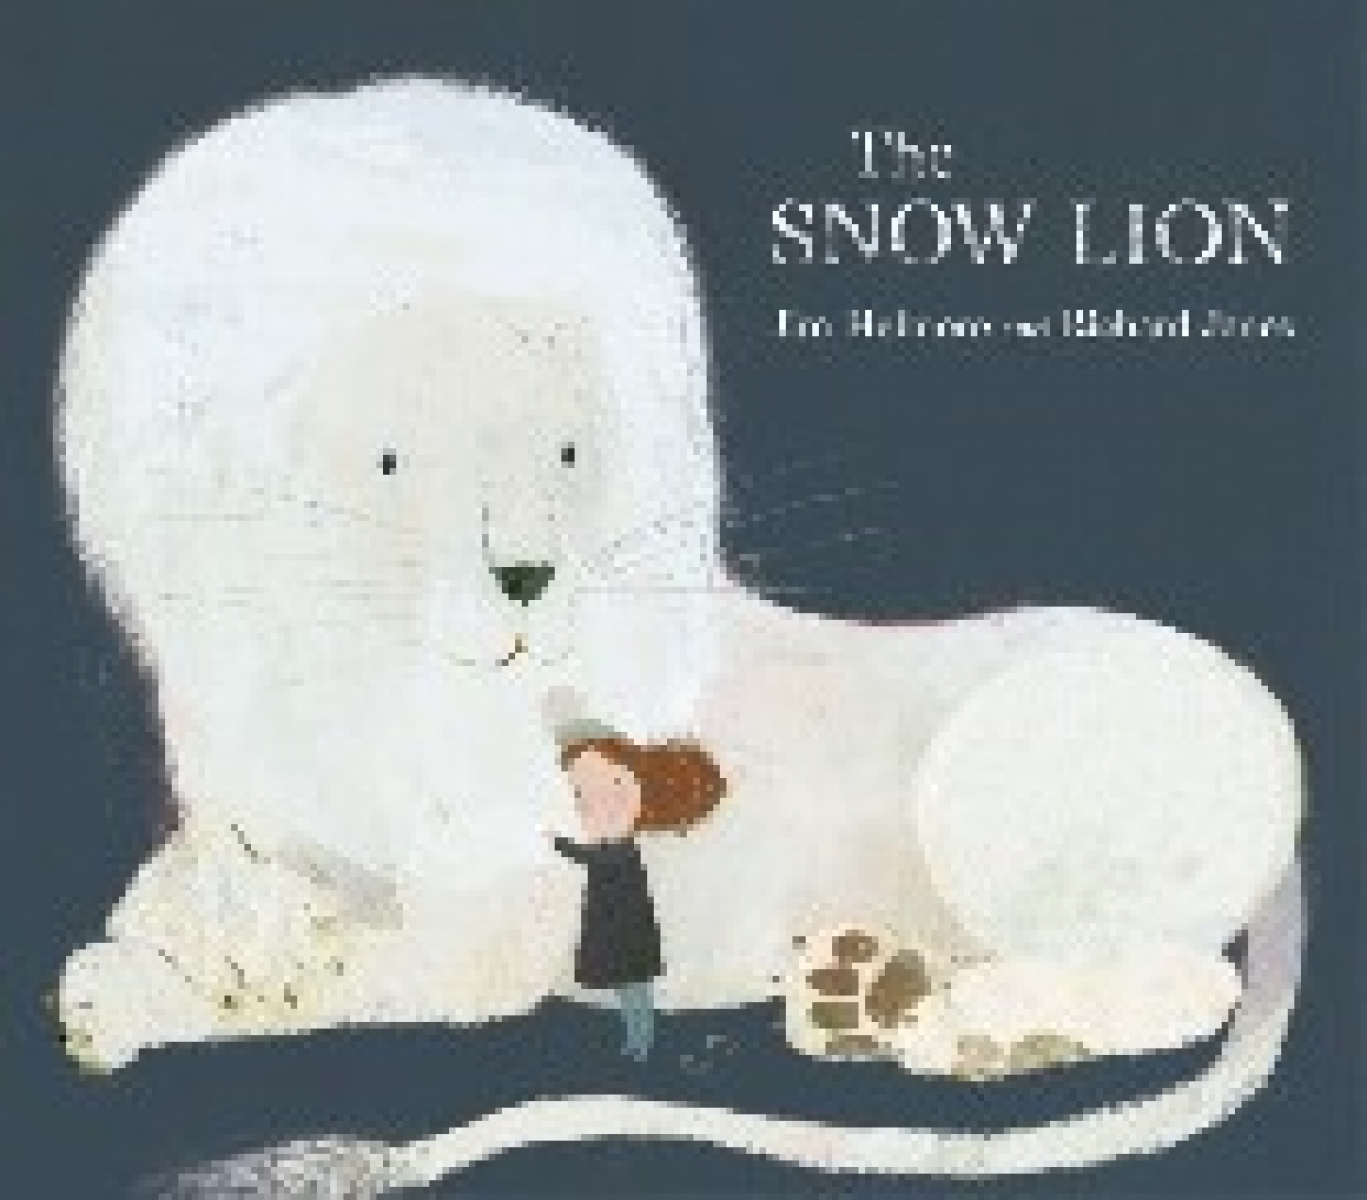 Helmore, Jim Jones The Snow lion 